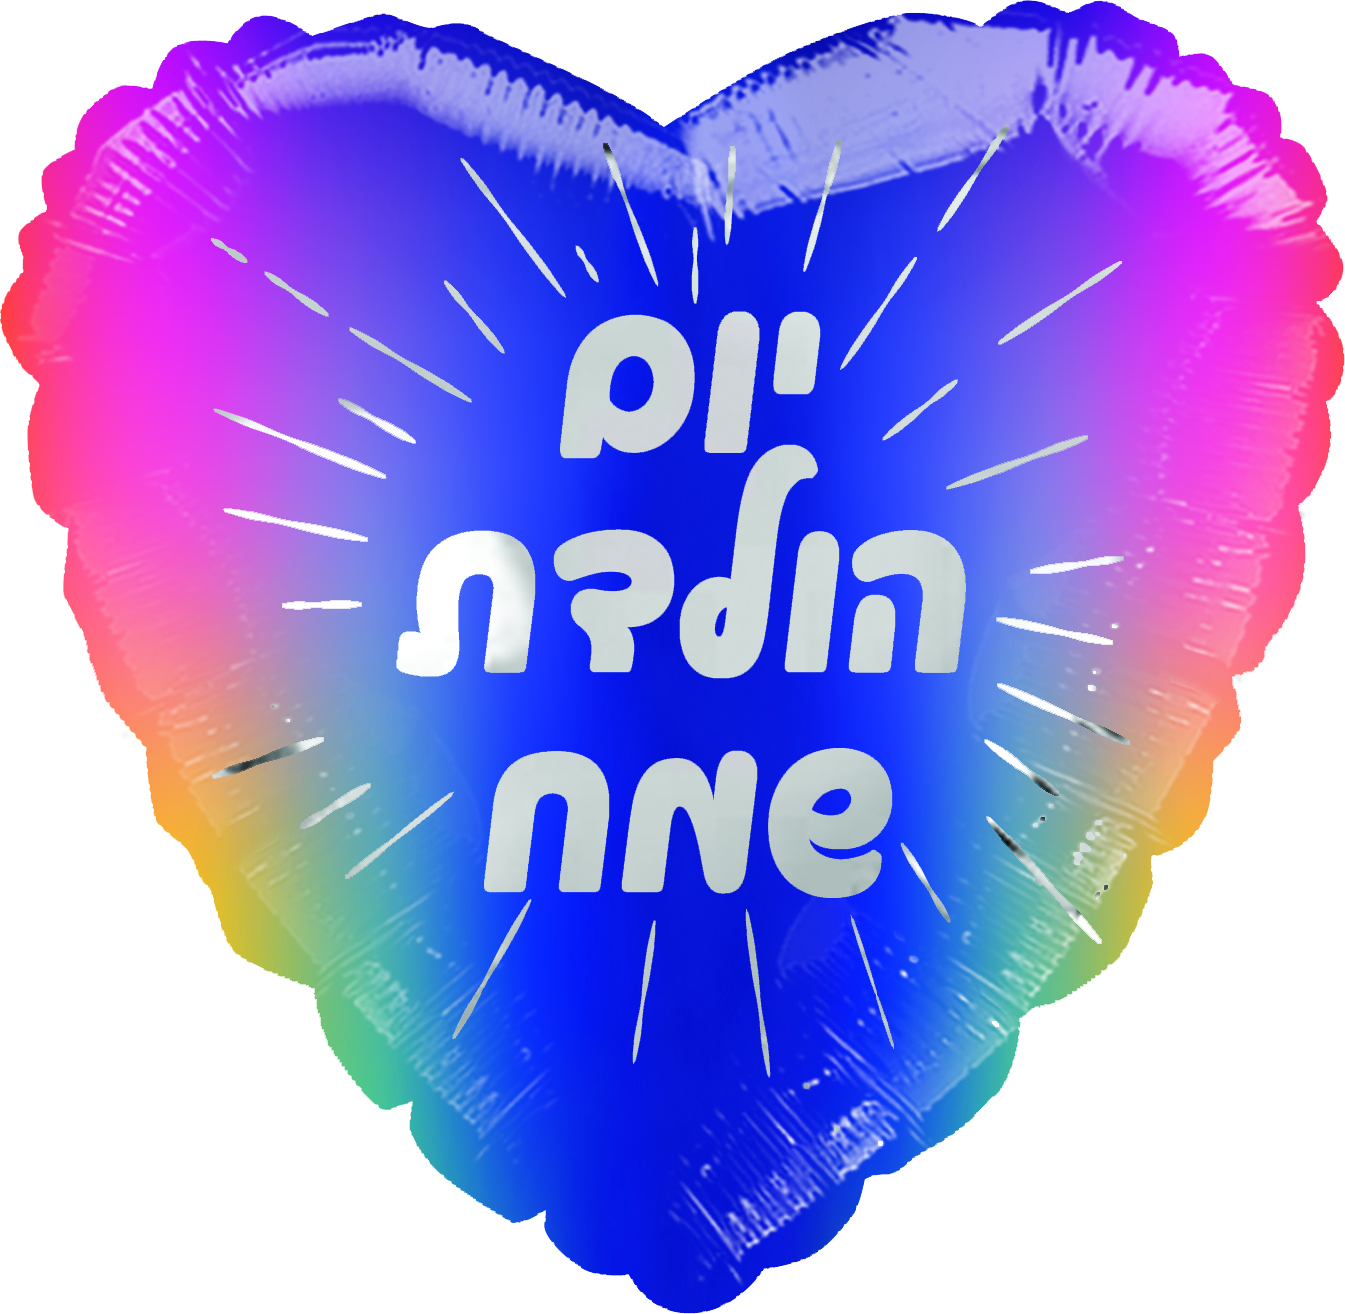 20" Happy Birthday Rainbow Heart Hebrew Foil Balloon